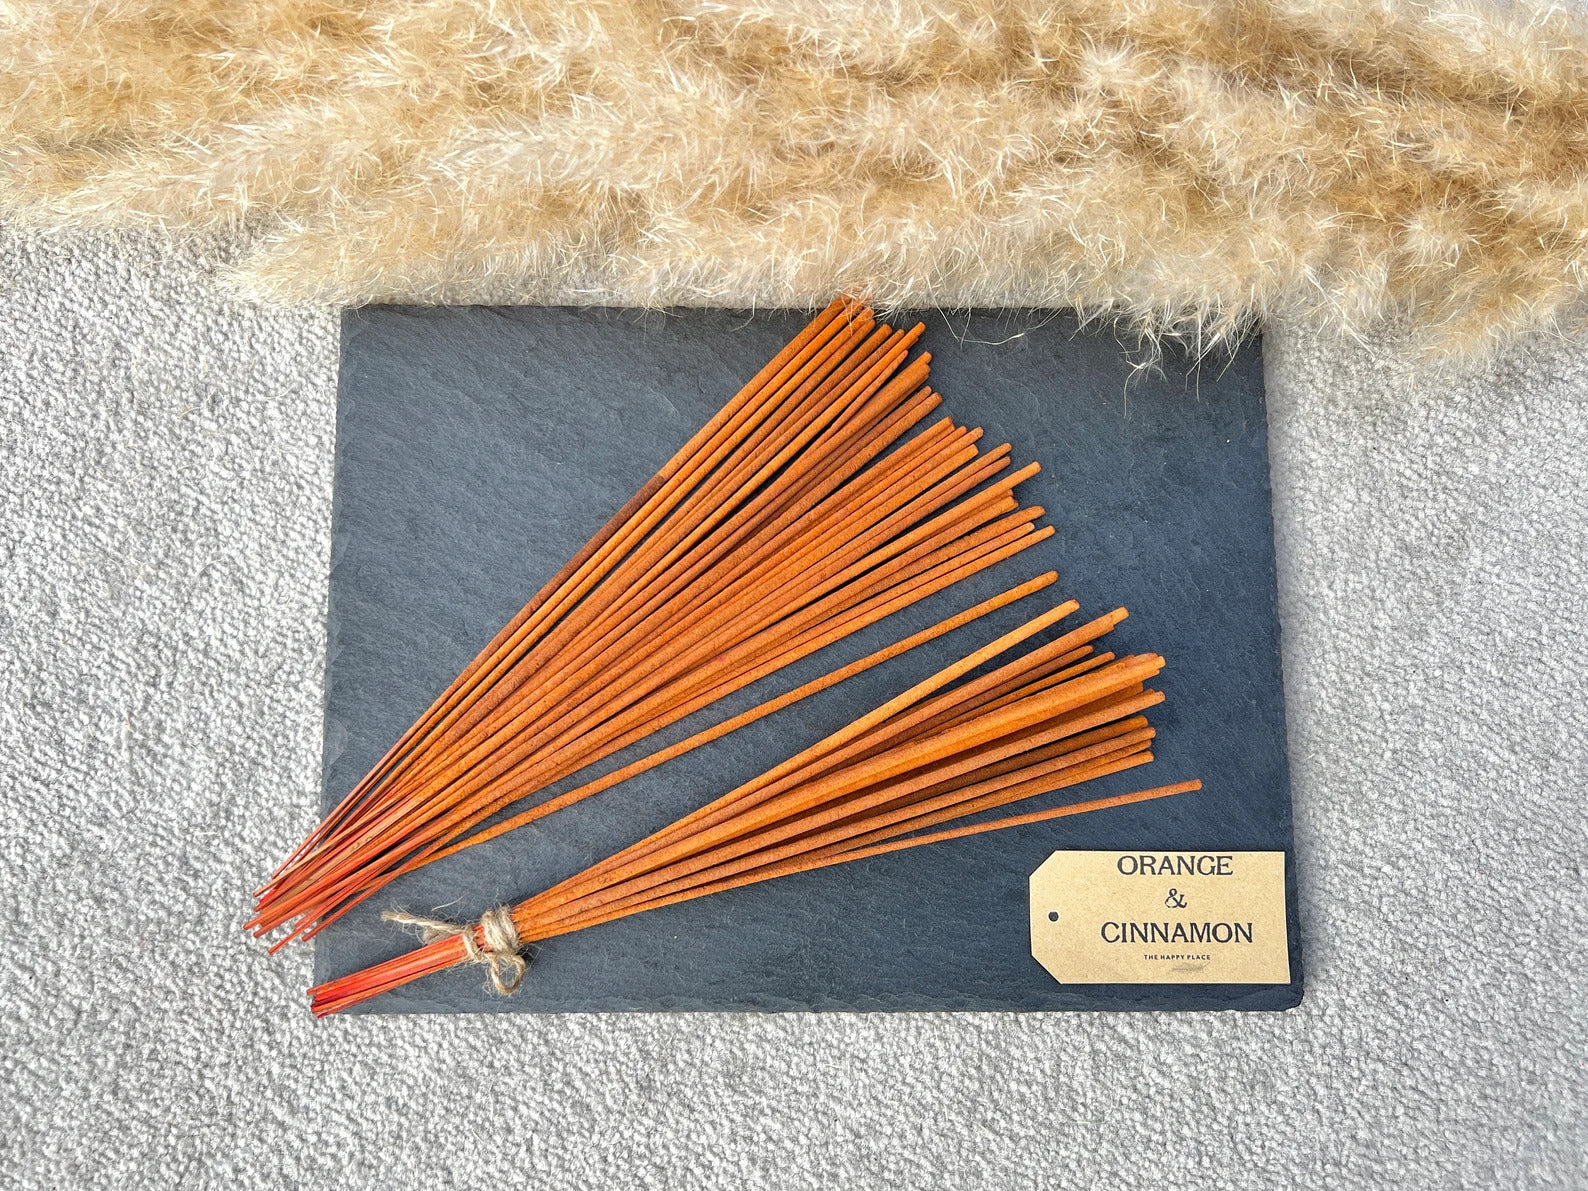 Cinnamon and Orange Incense Sticks - Bamboo Incense Stick